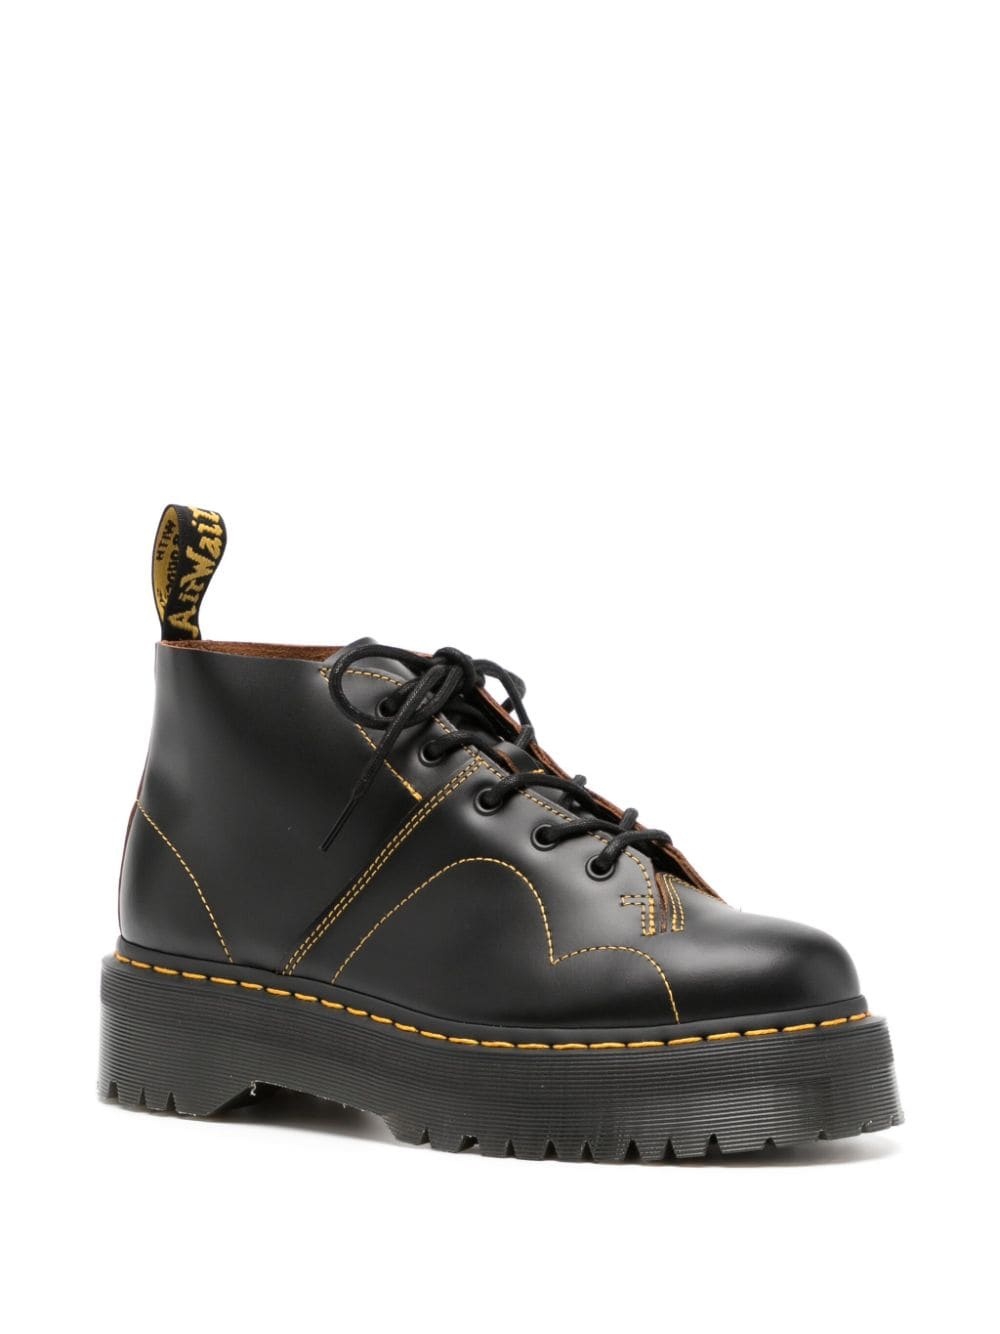 Church Quad leather boots - 2